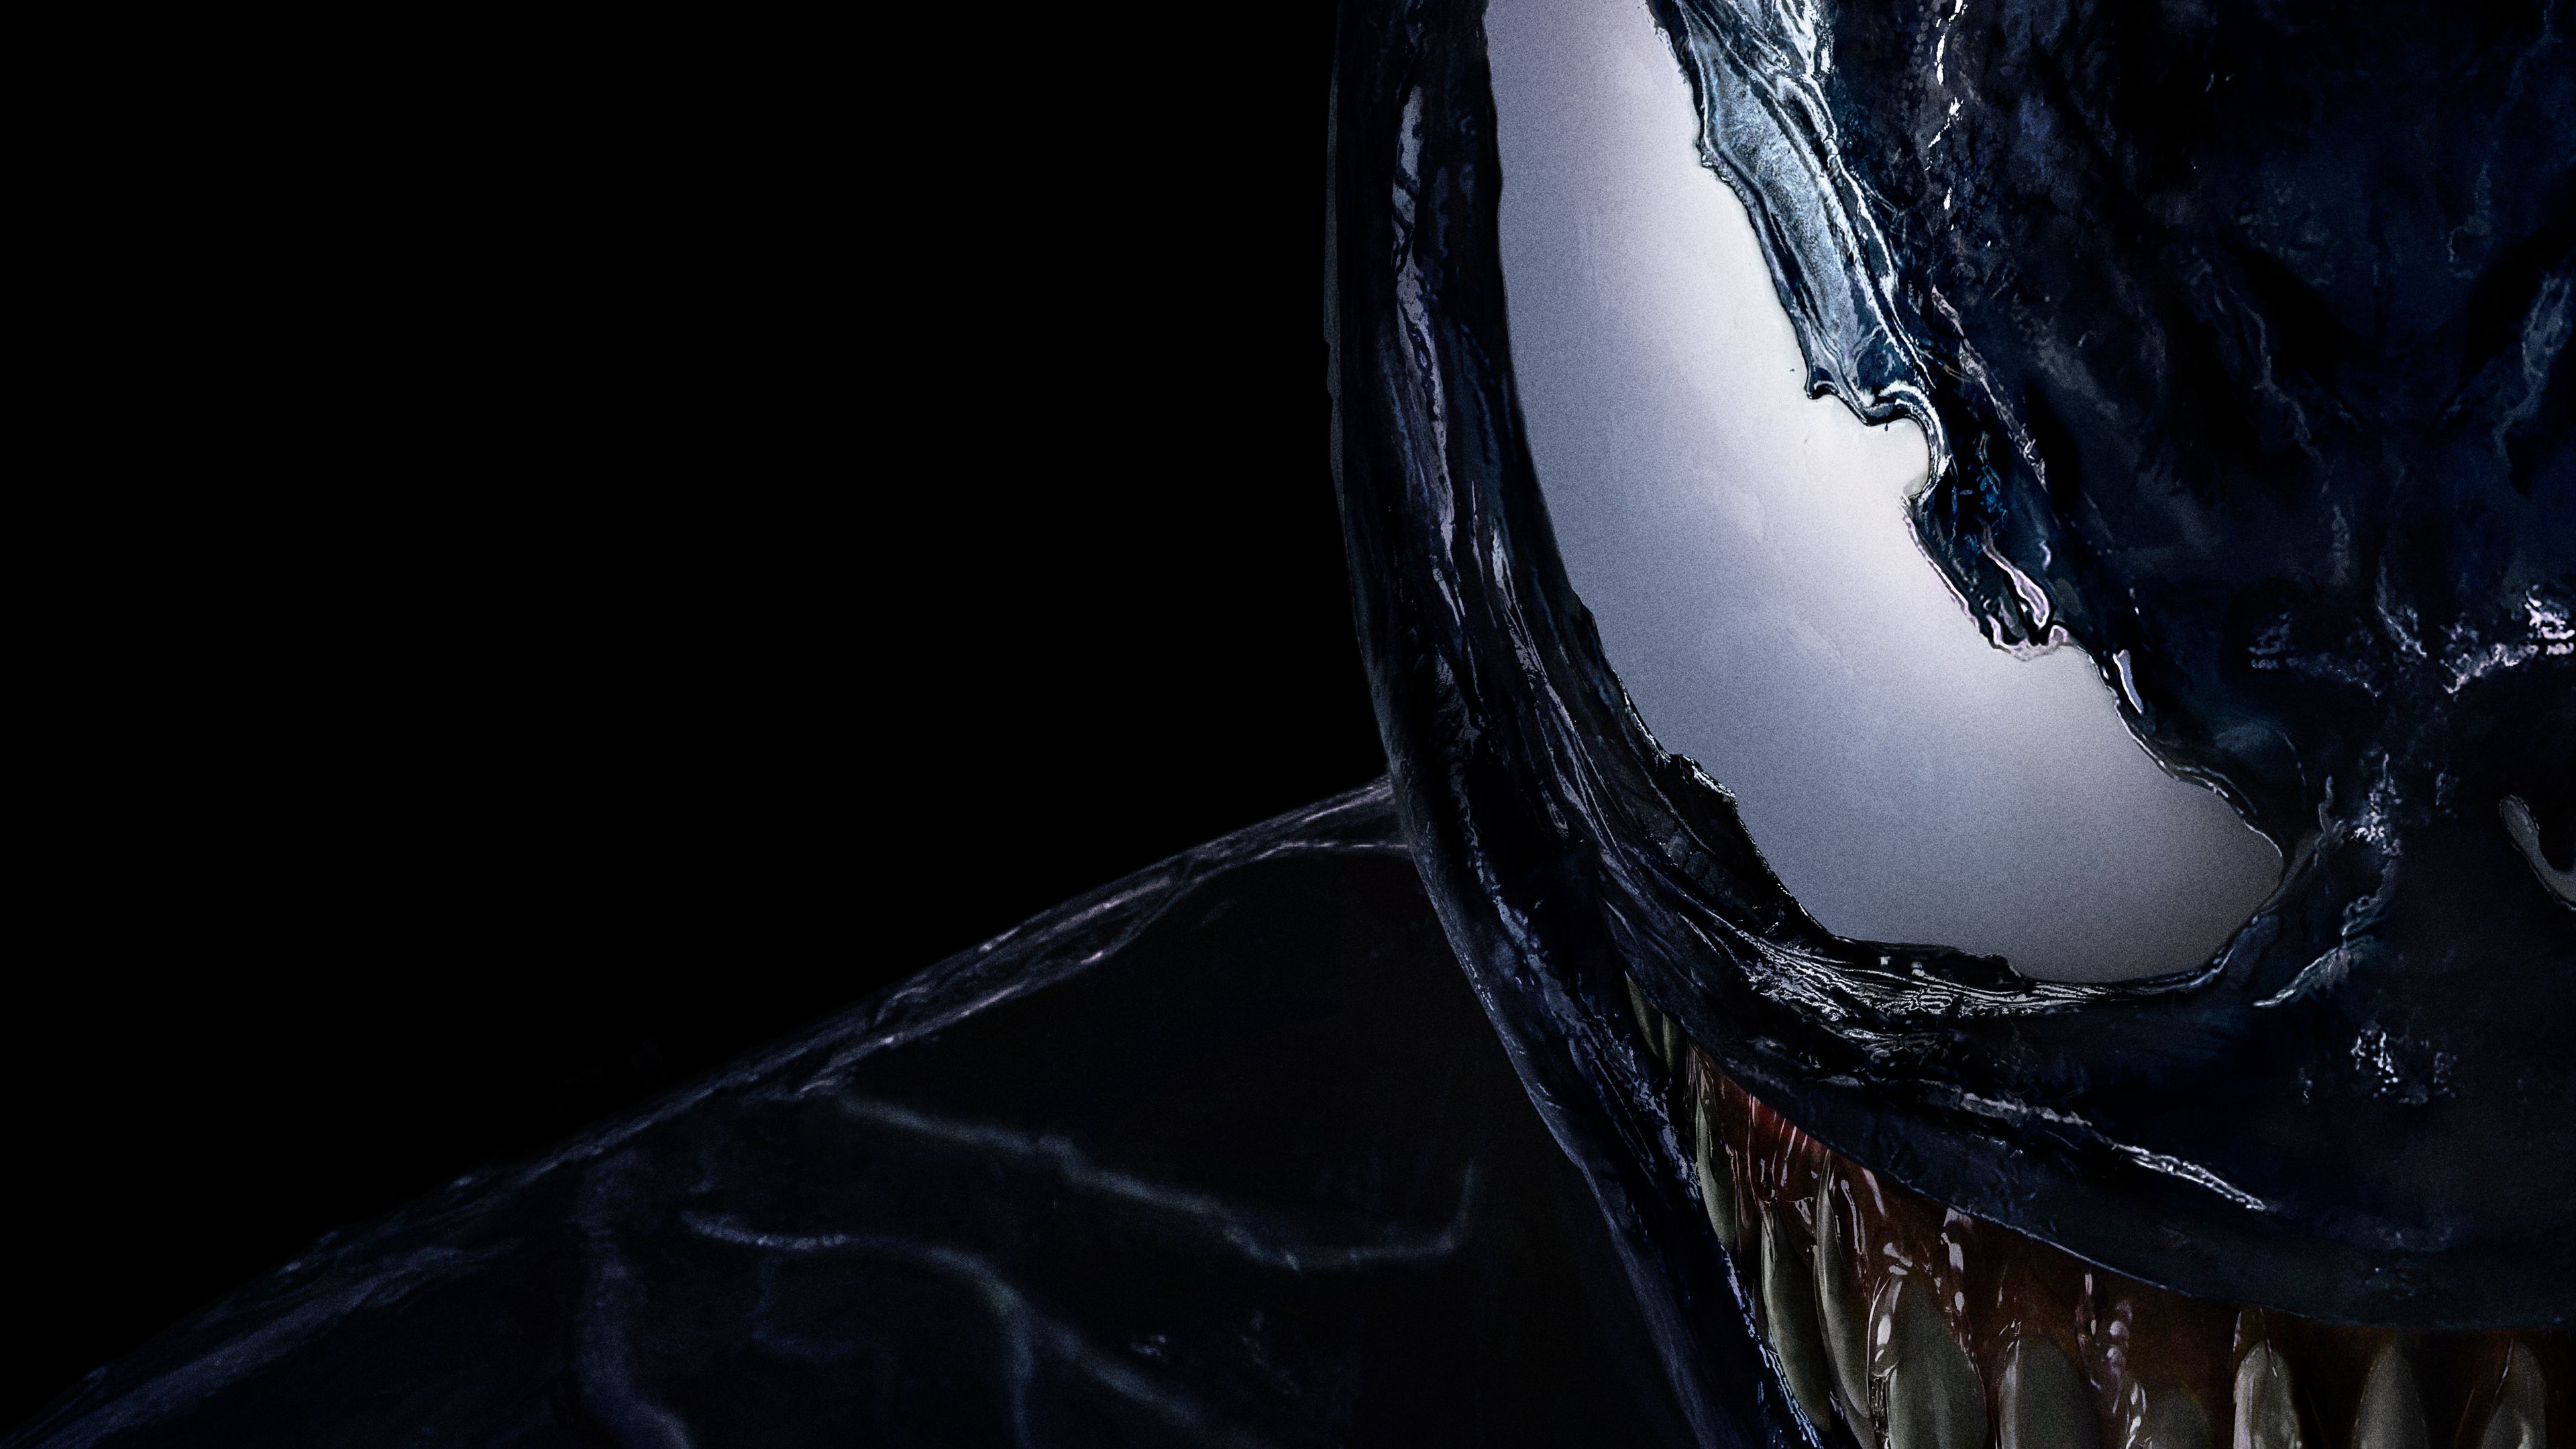 Venom download the last version for iphone